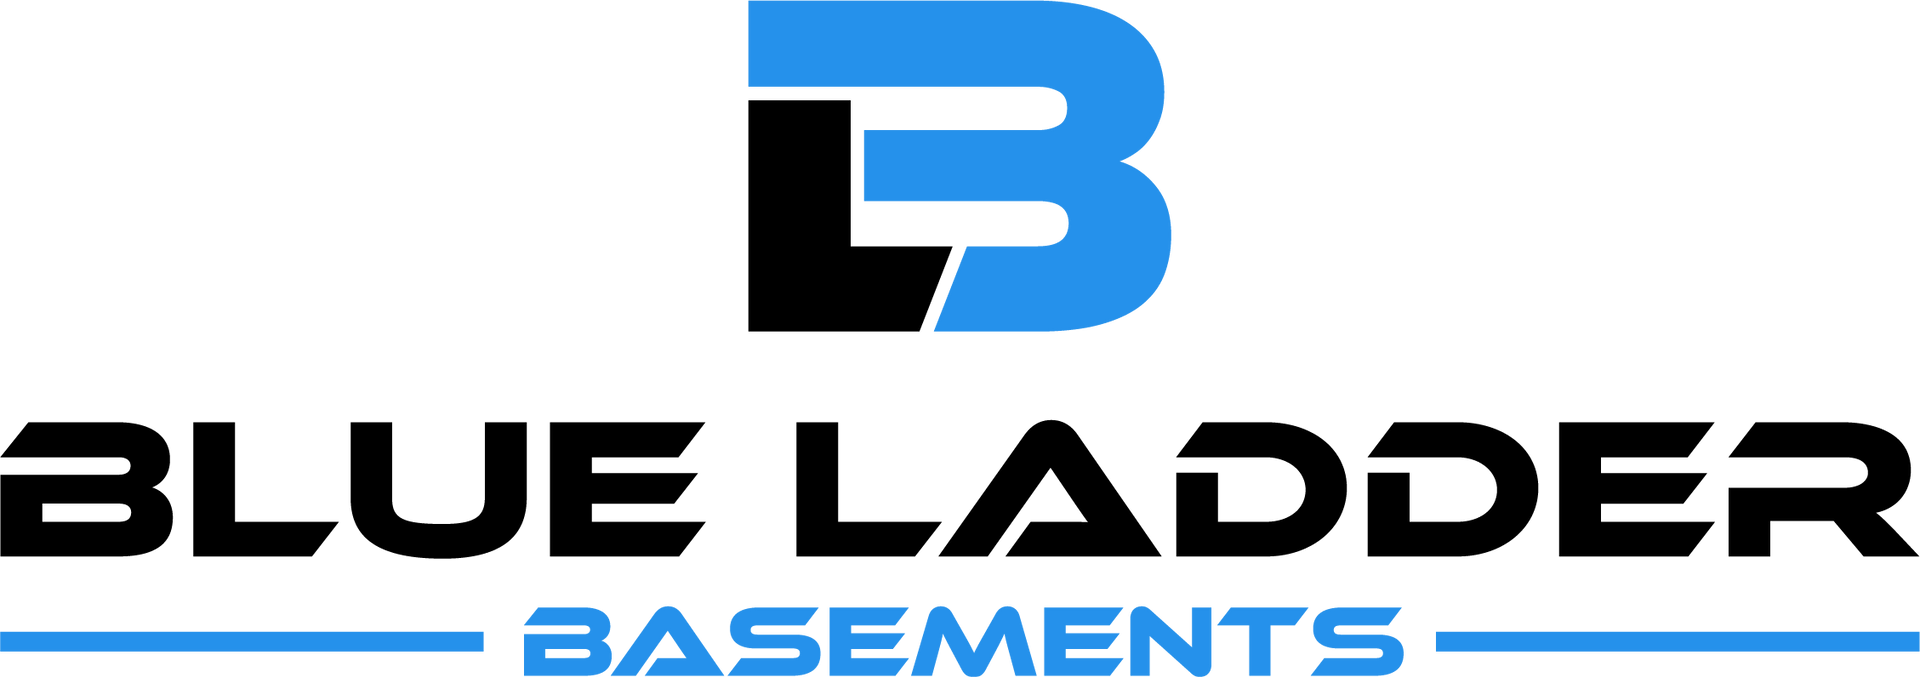 Blue Ladder Basements logo